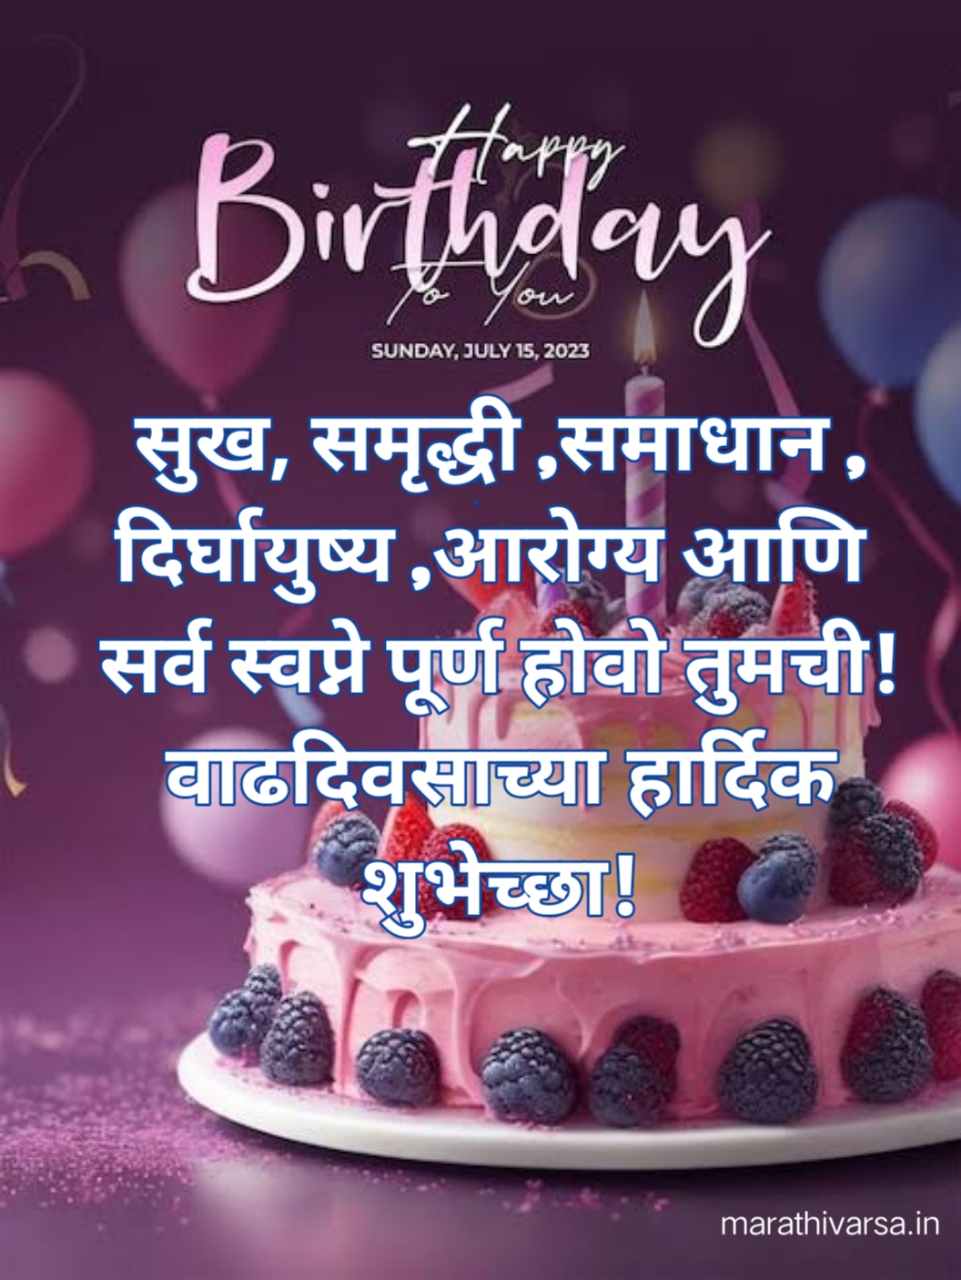 वाढदिवस शुभेच्छा संदेश मराठी/ Happy Birthday wishes in marathi 2024